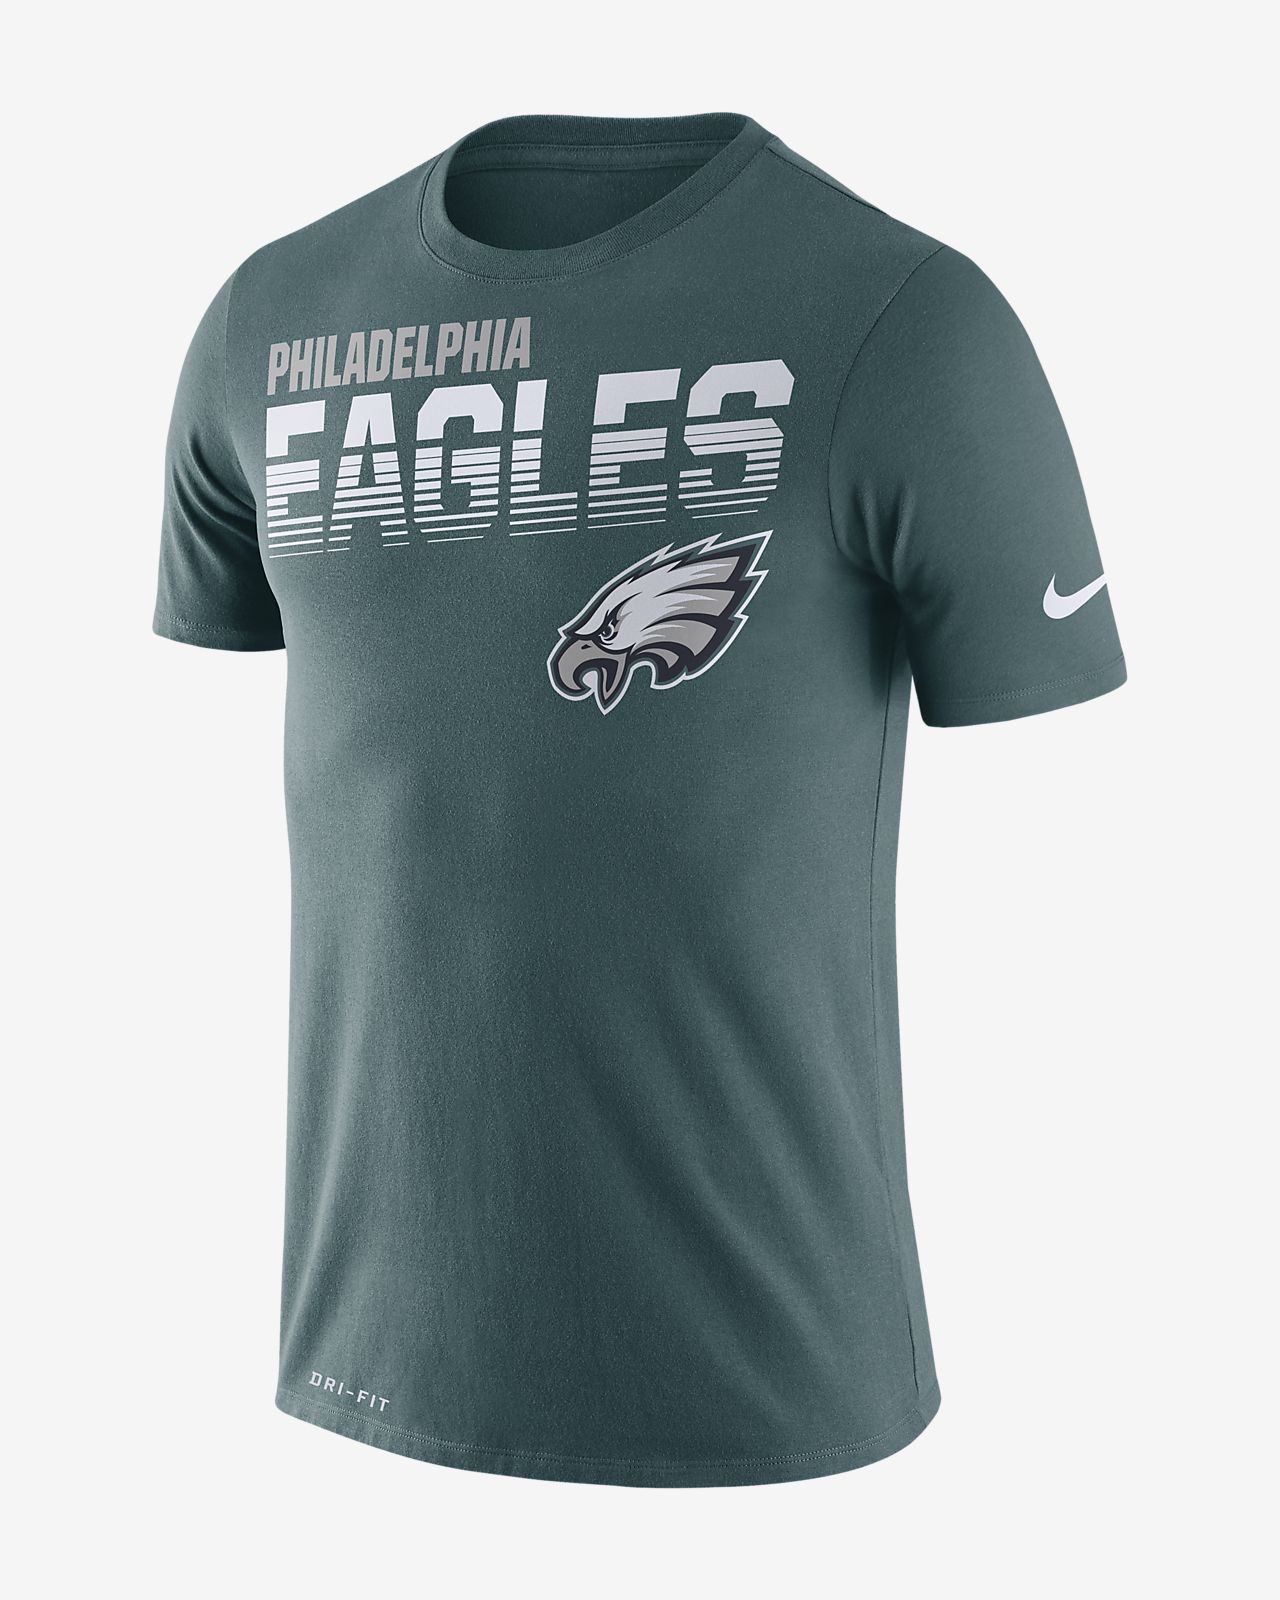 NFL Eagles) Men's Short-Sleeve T-Shirt 